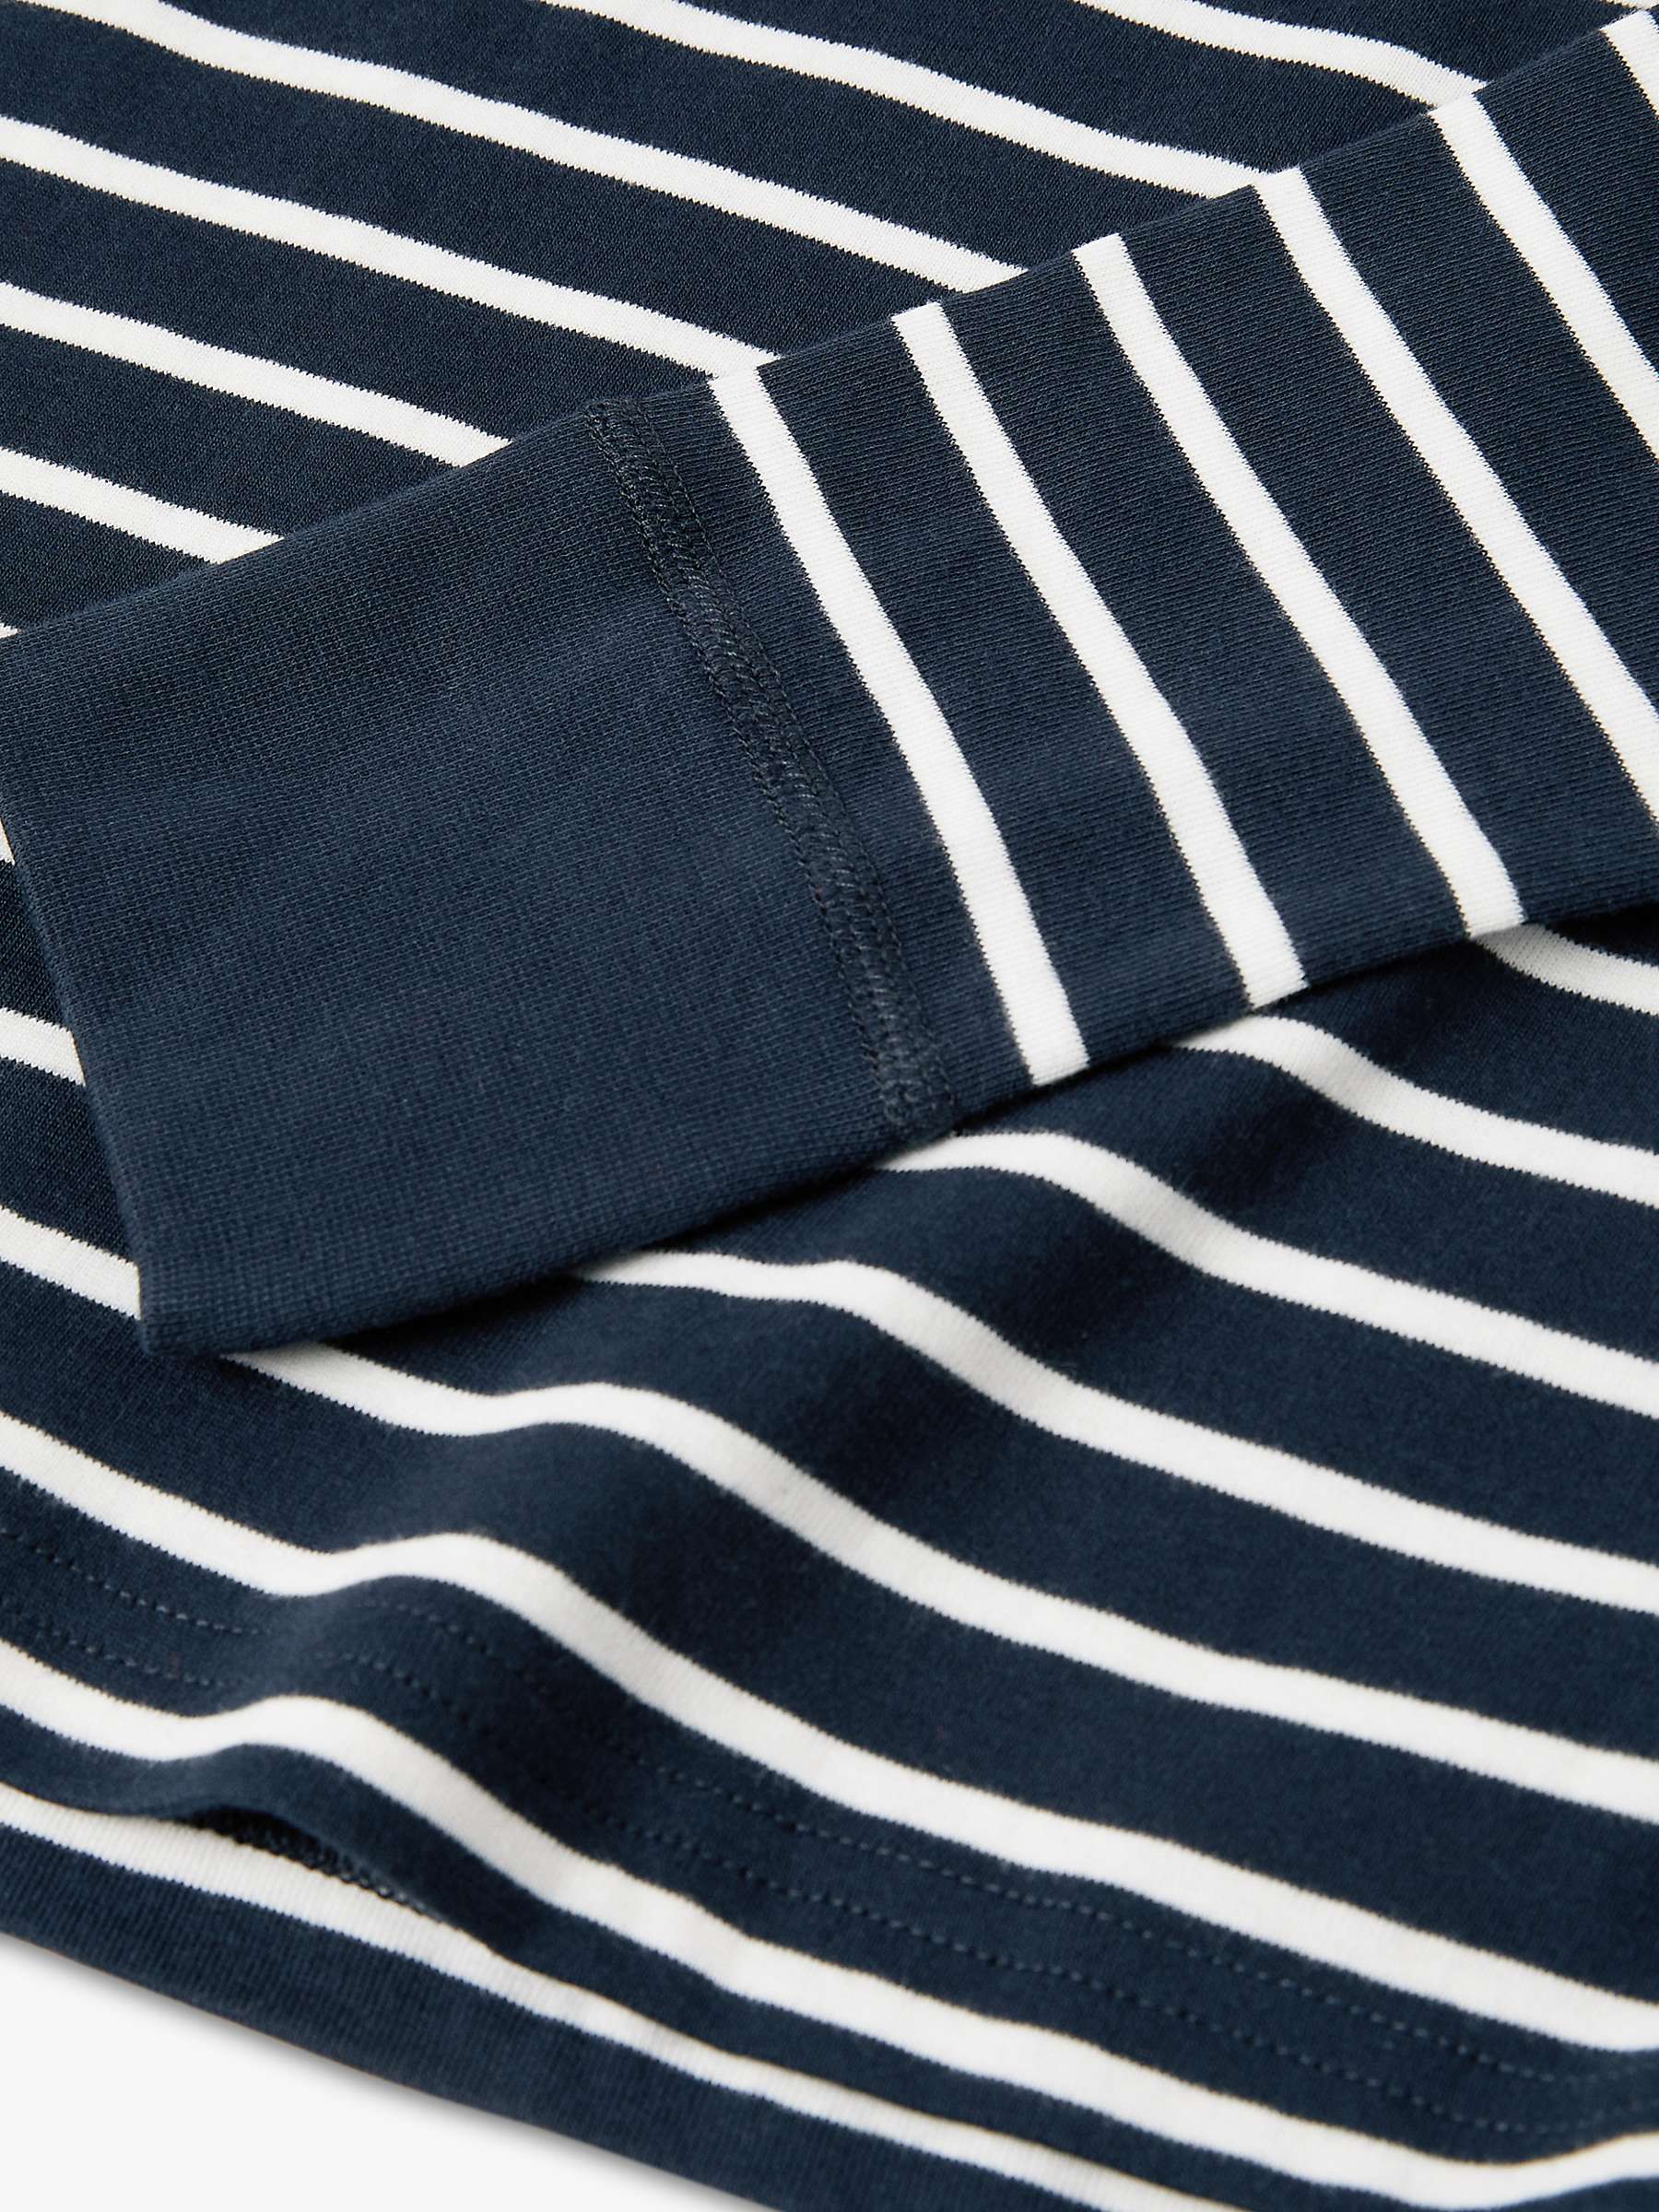 Buy Polarn O. Pyret Baby Organic Cotton Stripe Long Sleeve Top, Blue Online at johnlewis.com